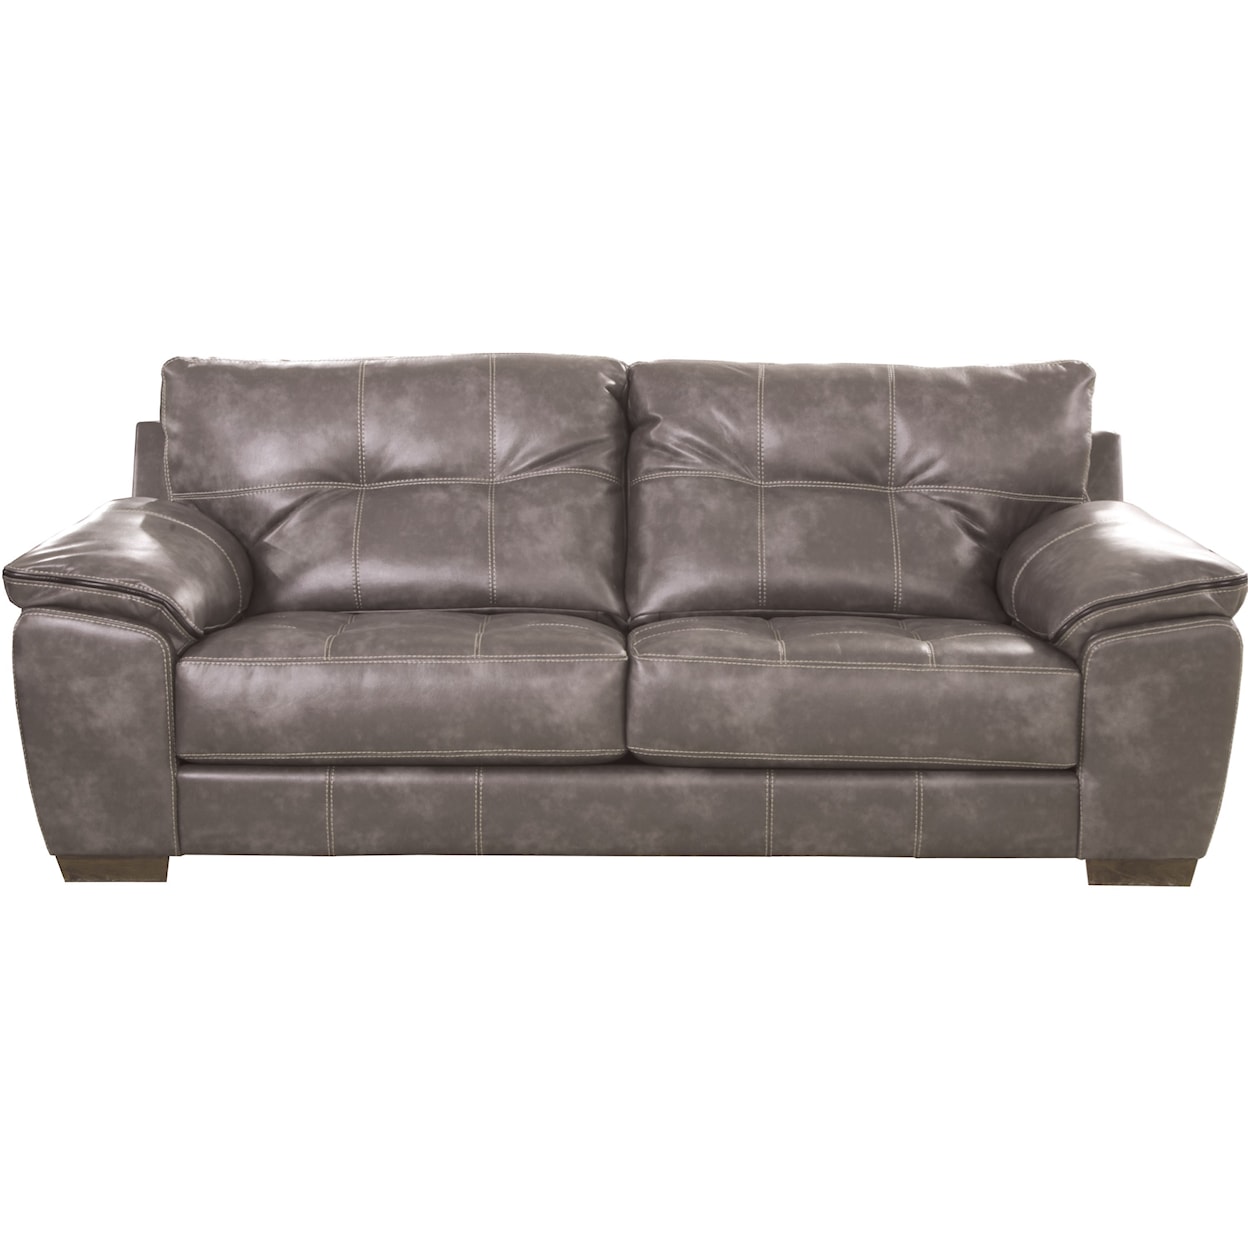 Jackson Furniture Hudson Sofa